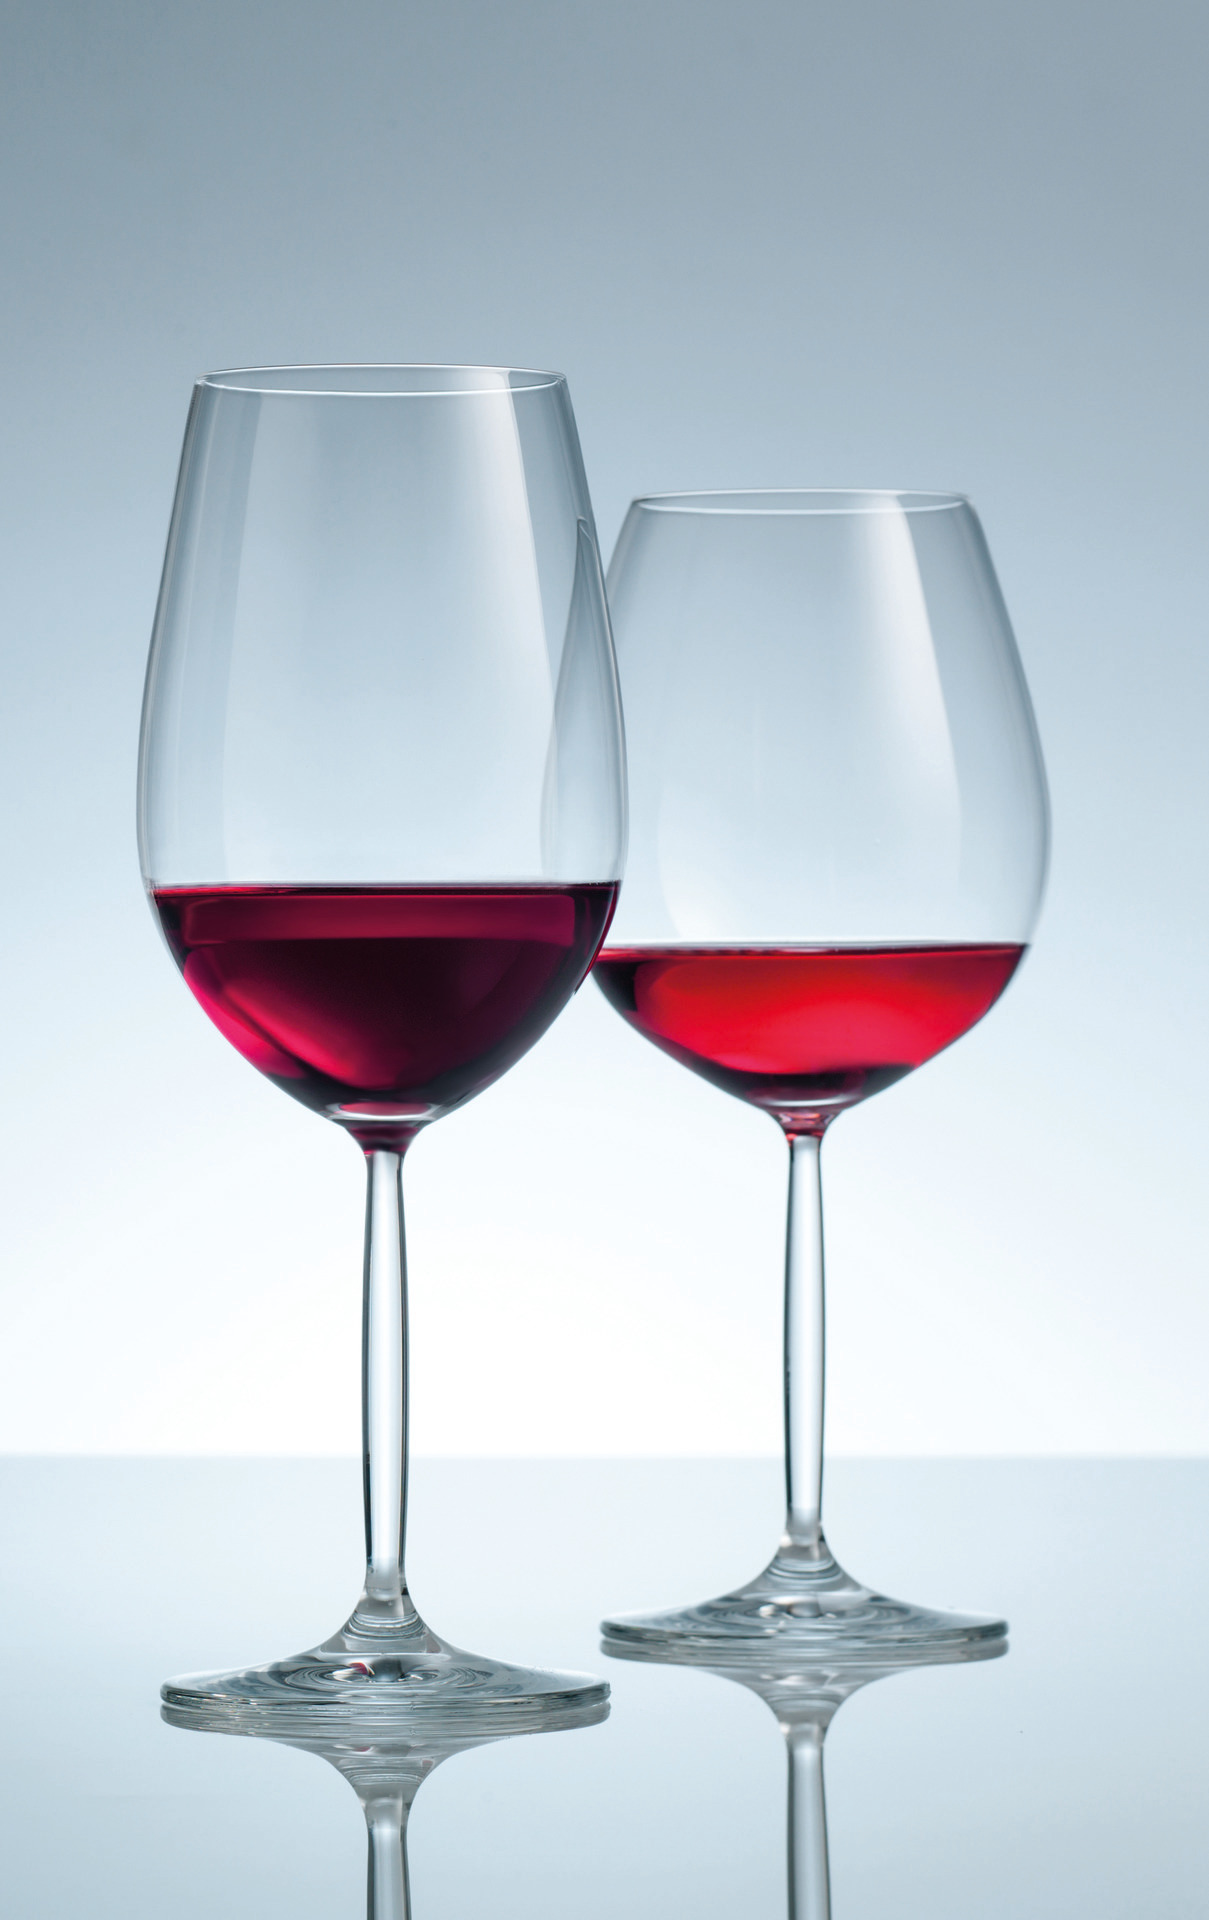 Wasser- / Rotweinglas 100 mm / 0,61 l